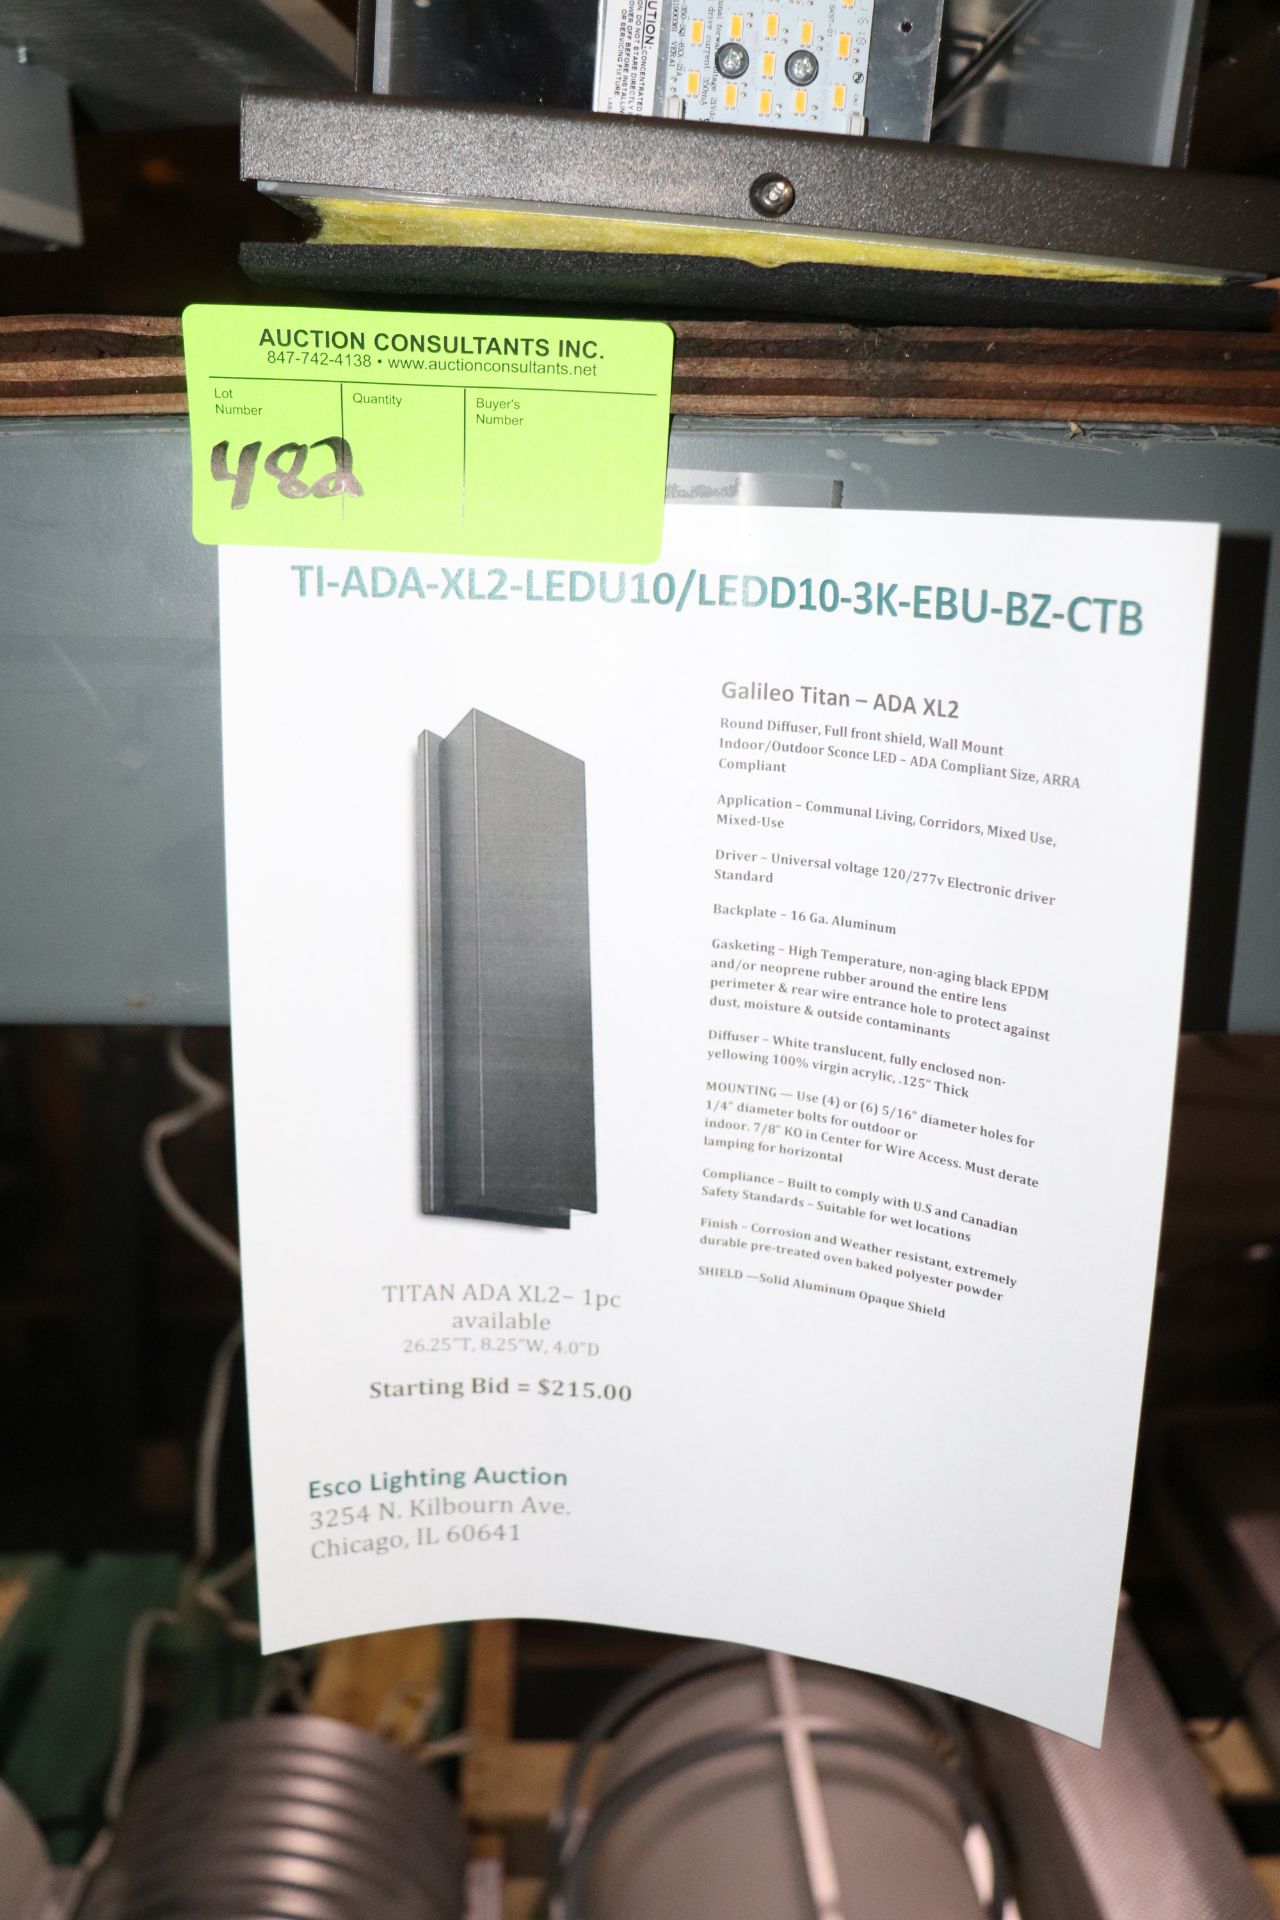 TI-ADAXL2-LEDU10/LEDD10-3K-EBU-BZ-CTB, 1 piece available - Image 2 of 2